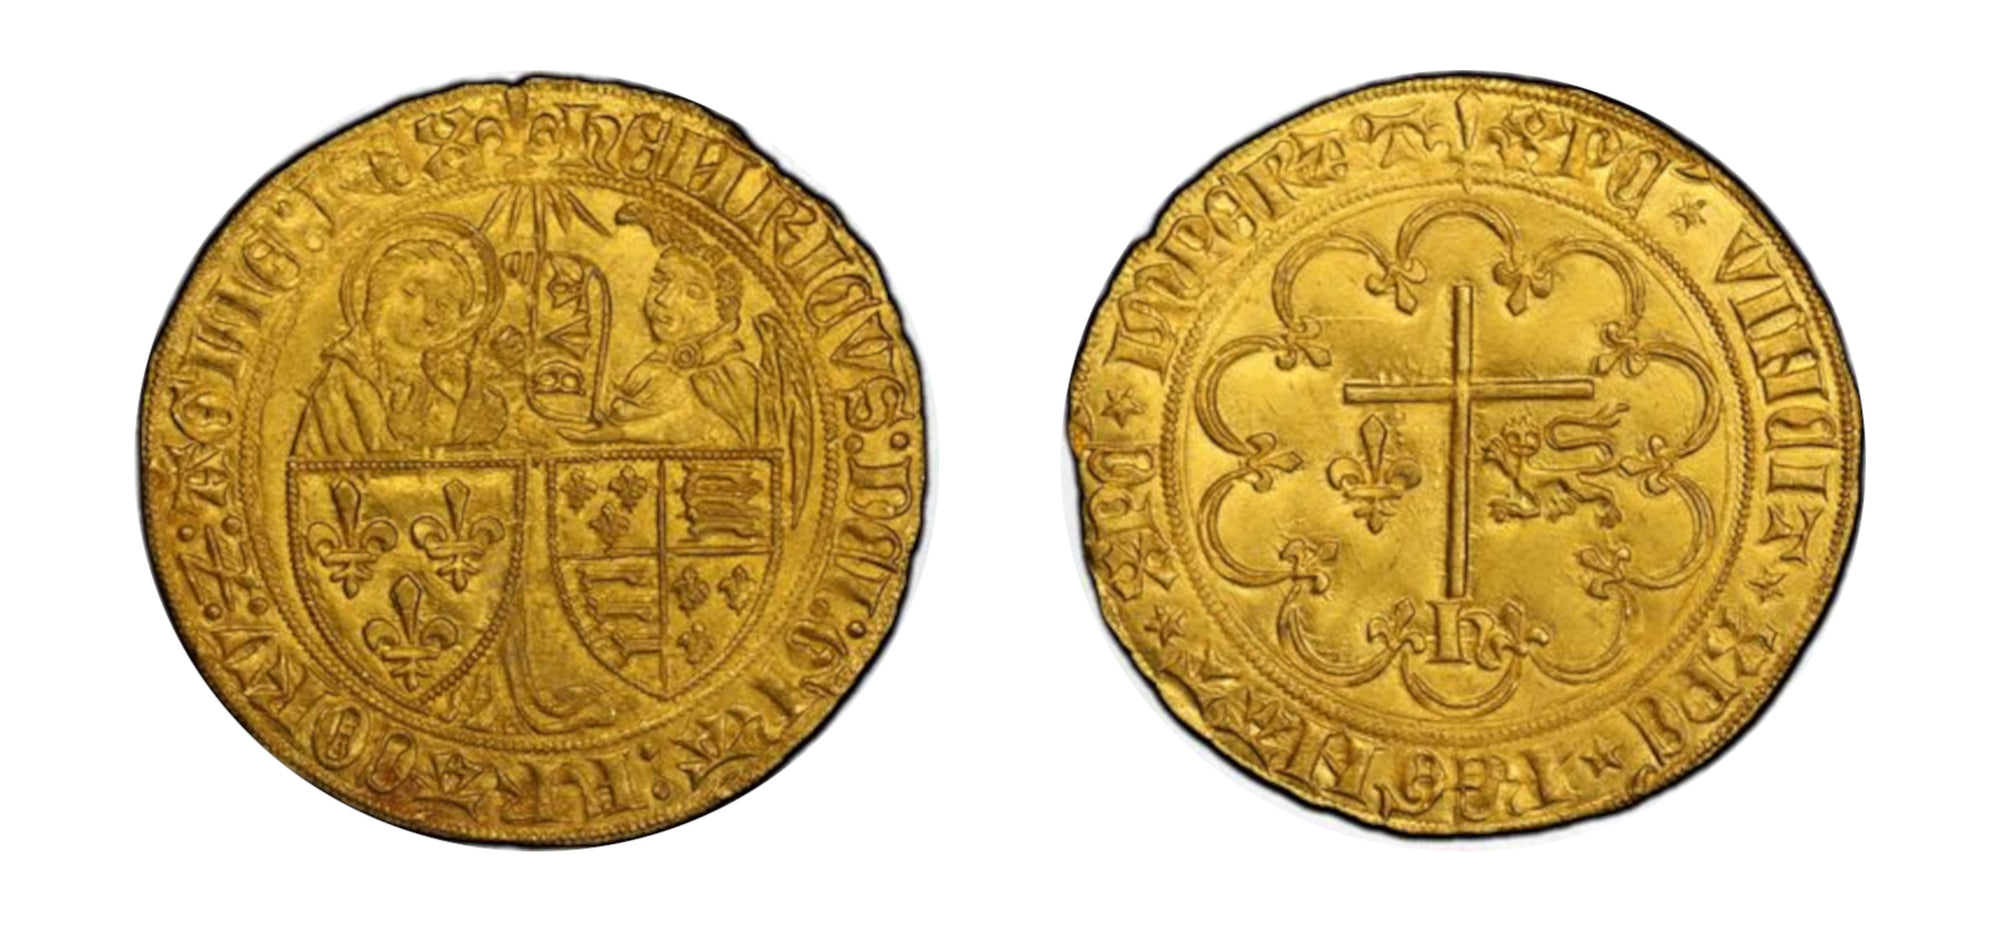 1422-1453 Salut D'OR King Henry VI PCGS MS65 - Hard Asset Management, Inc